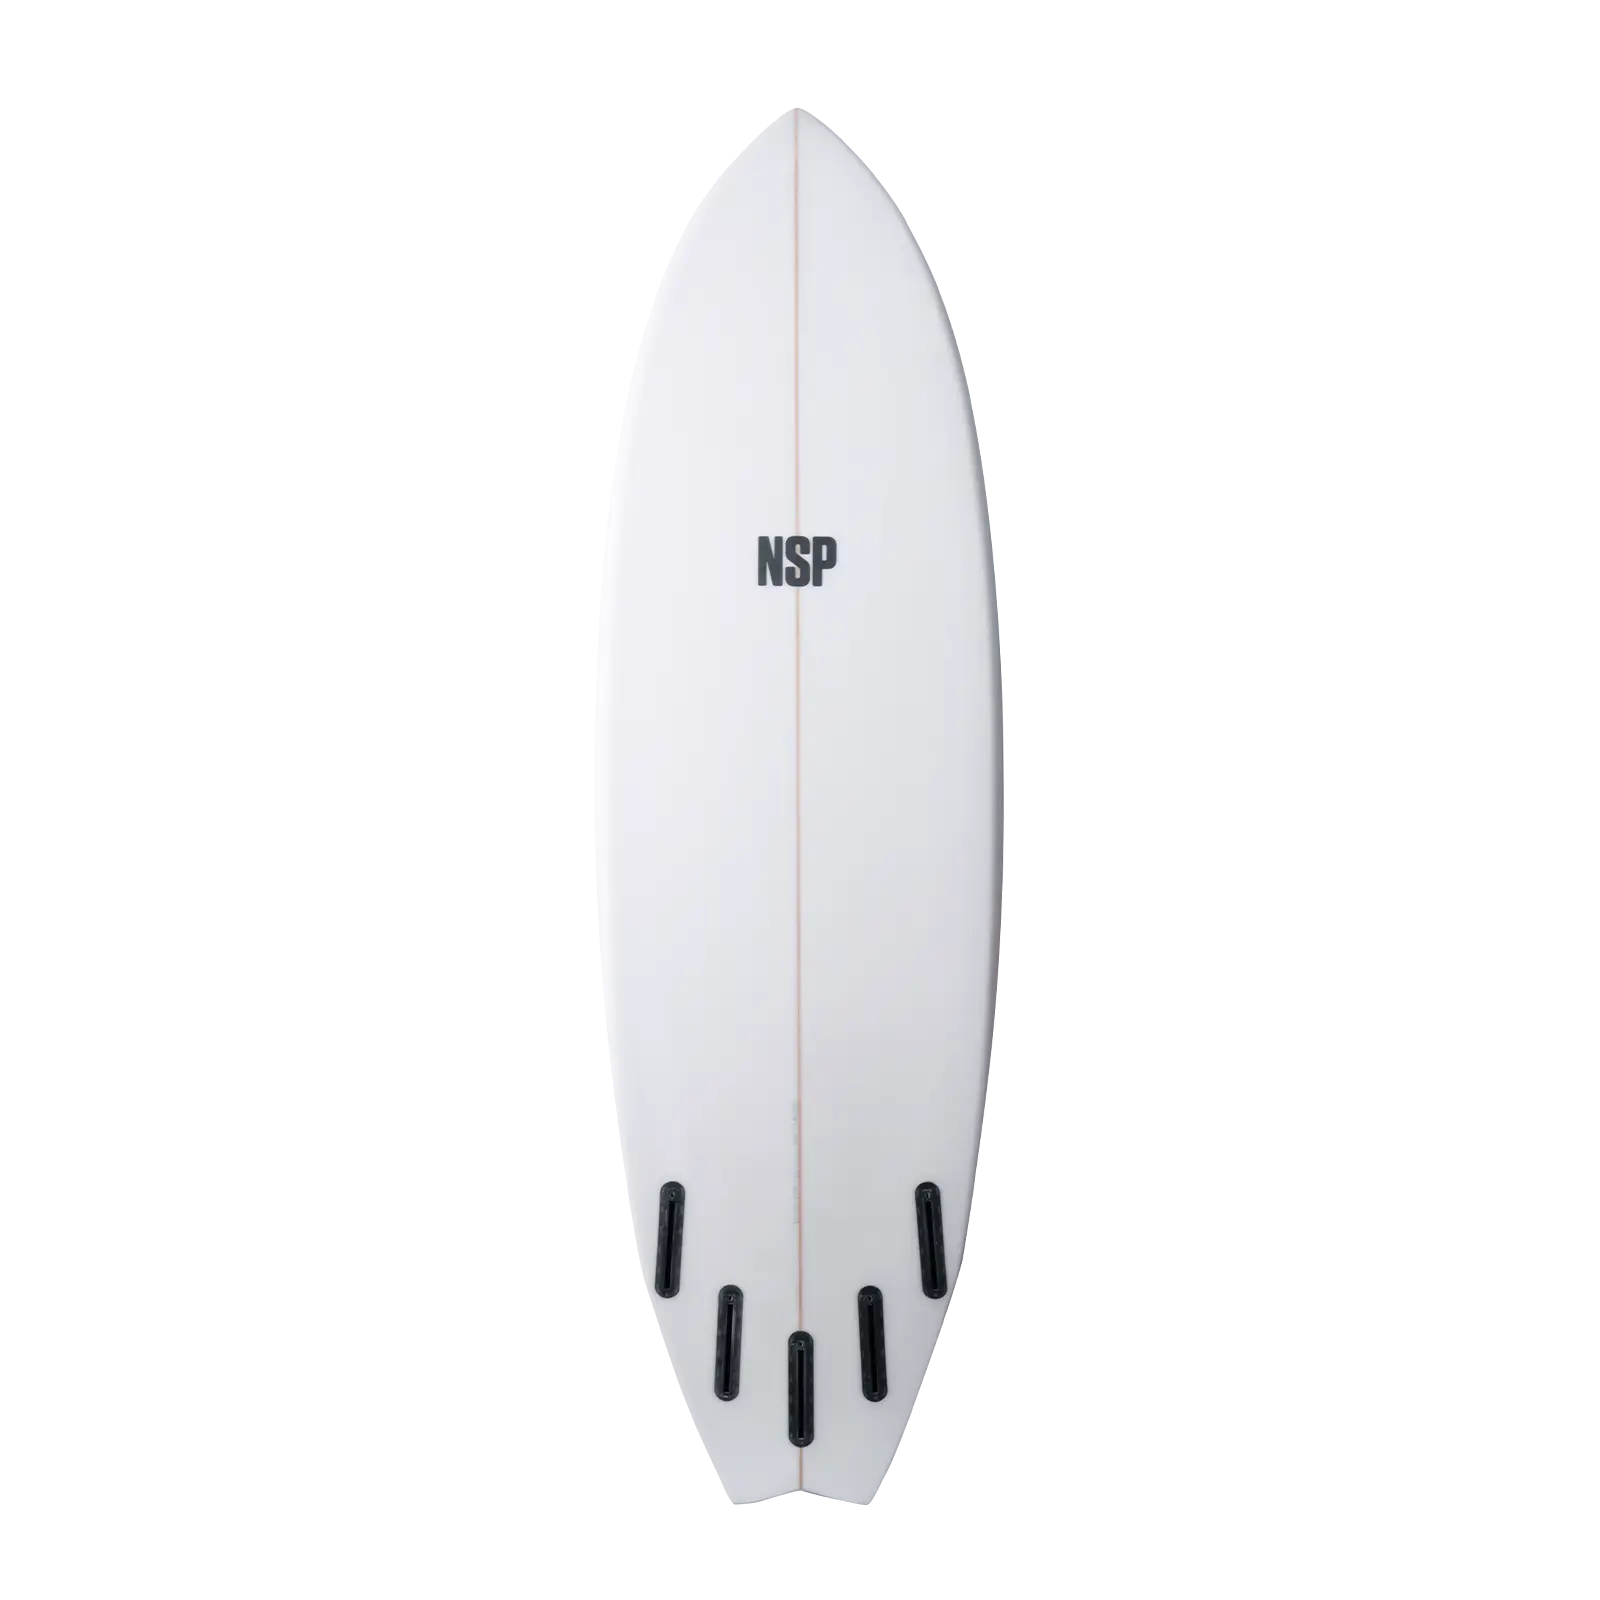 Kingfish Surfboards NSP  